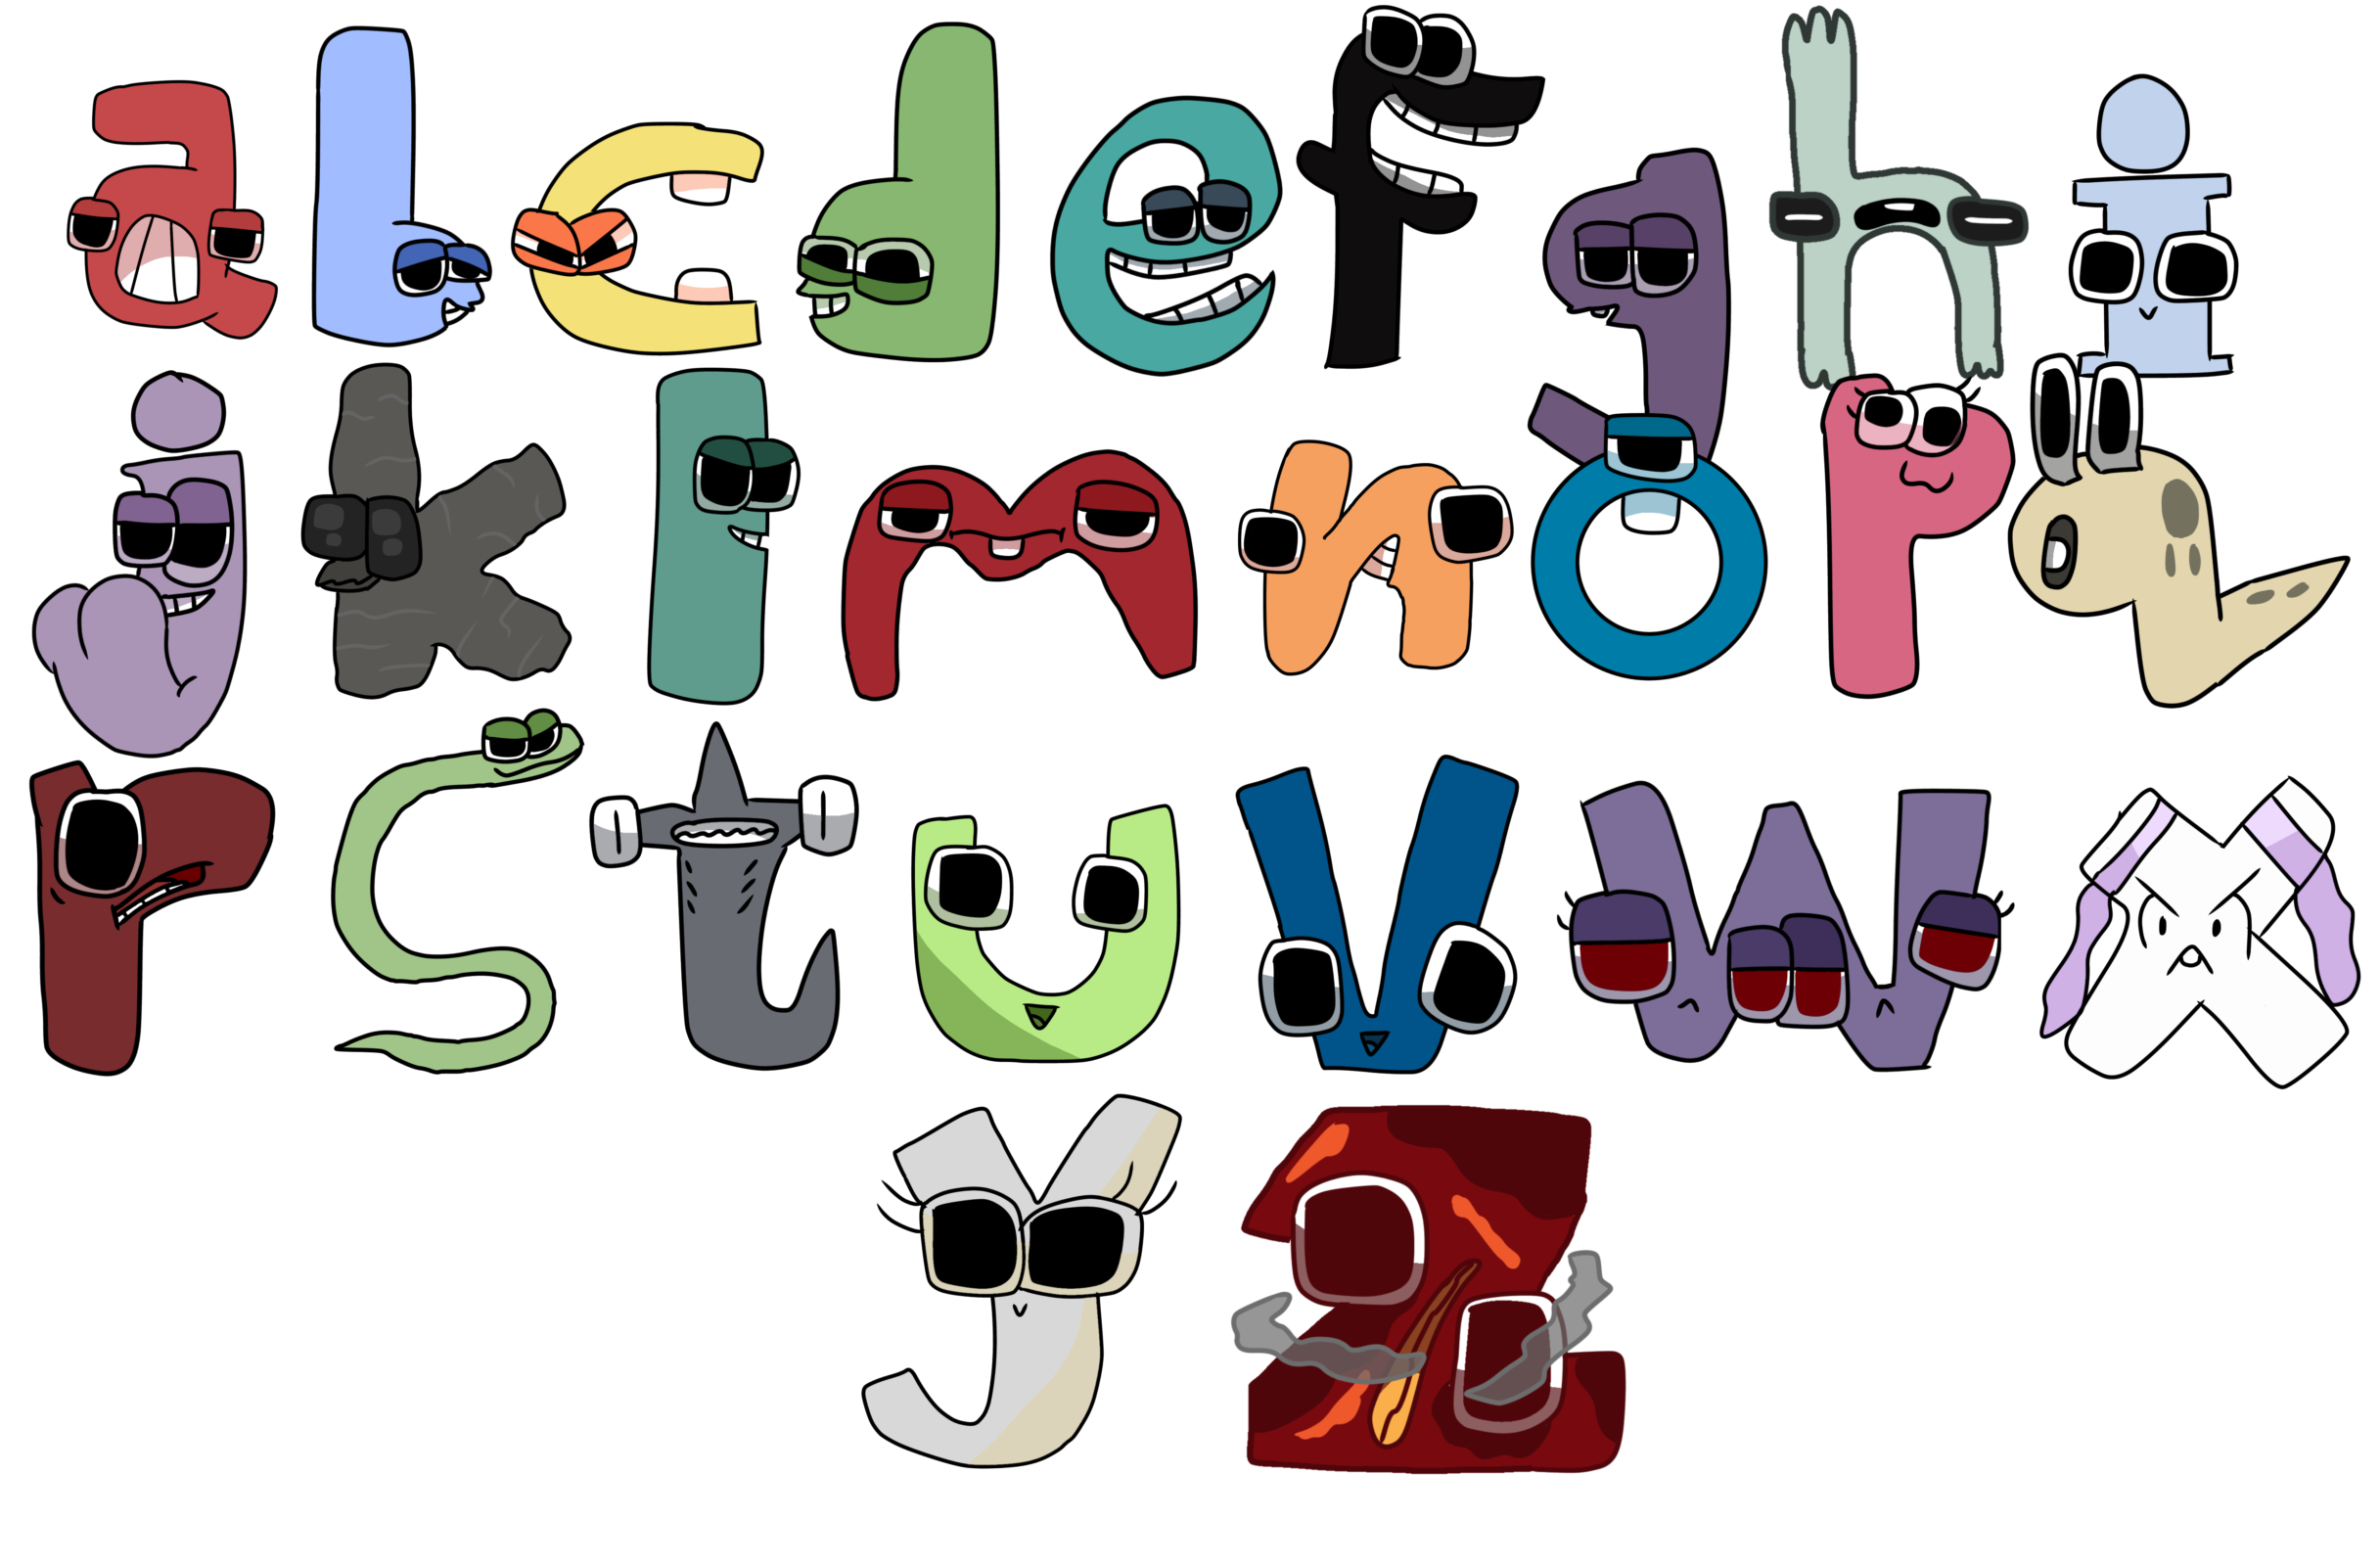 alphabet lore Lowercase by Eggrgfrvfr on DeviantArt